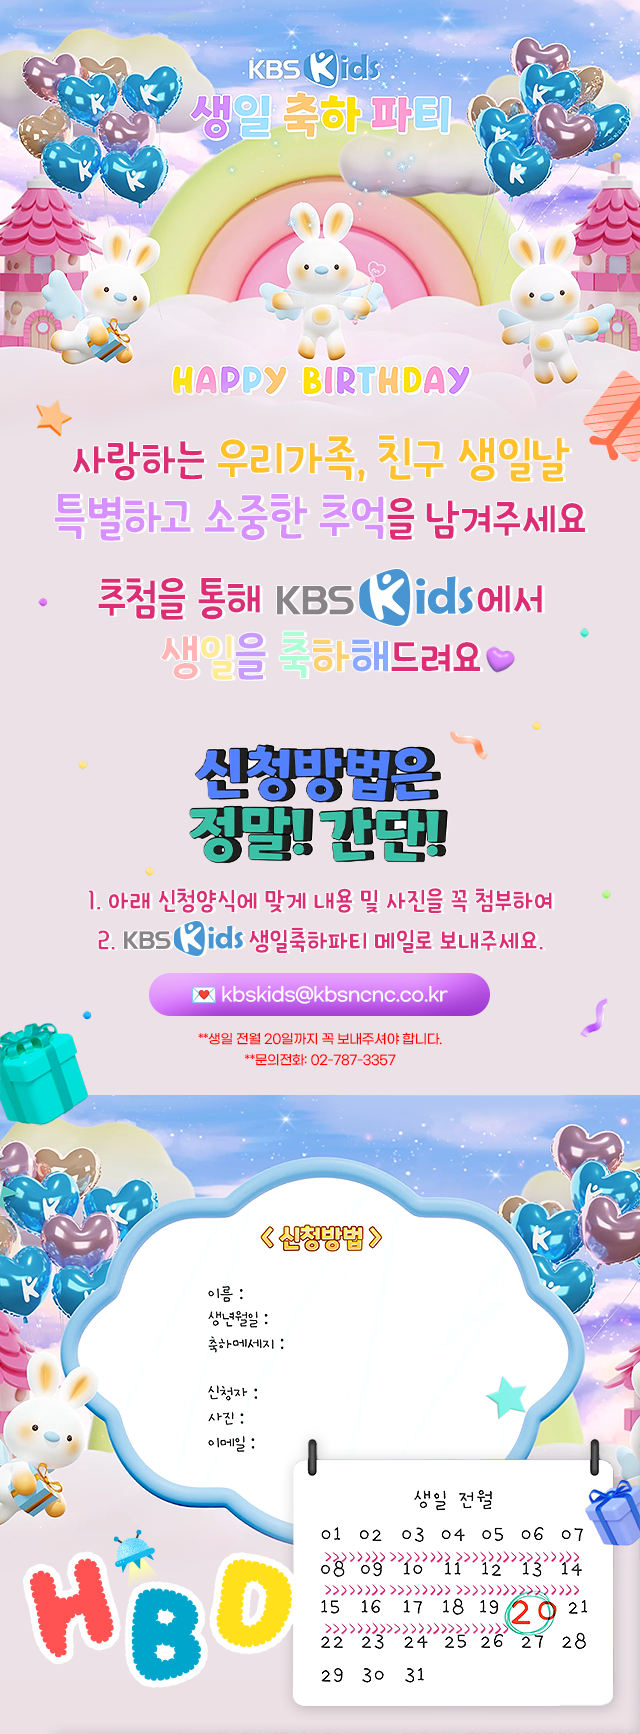 KBS Kids 생일 축하 파티